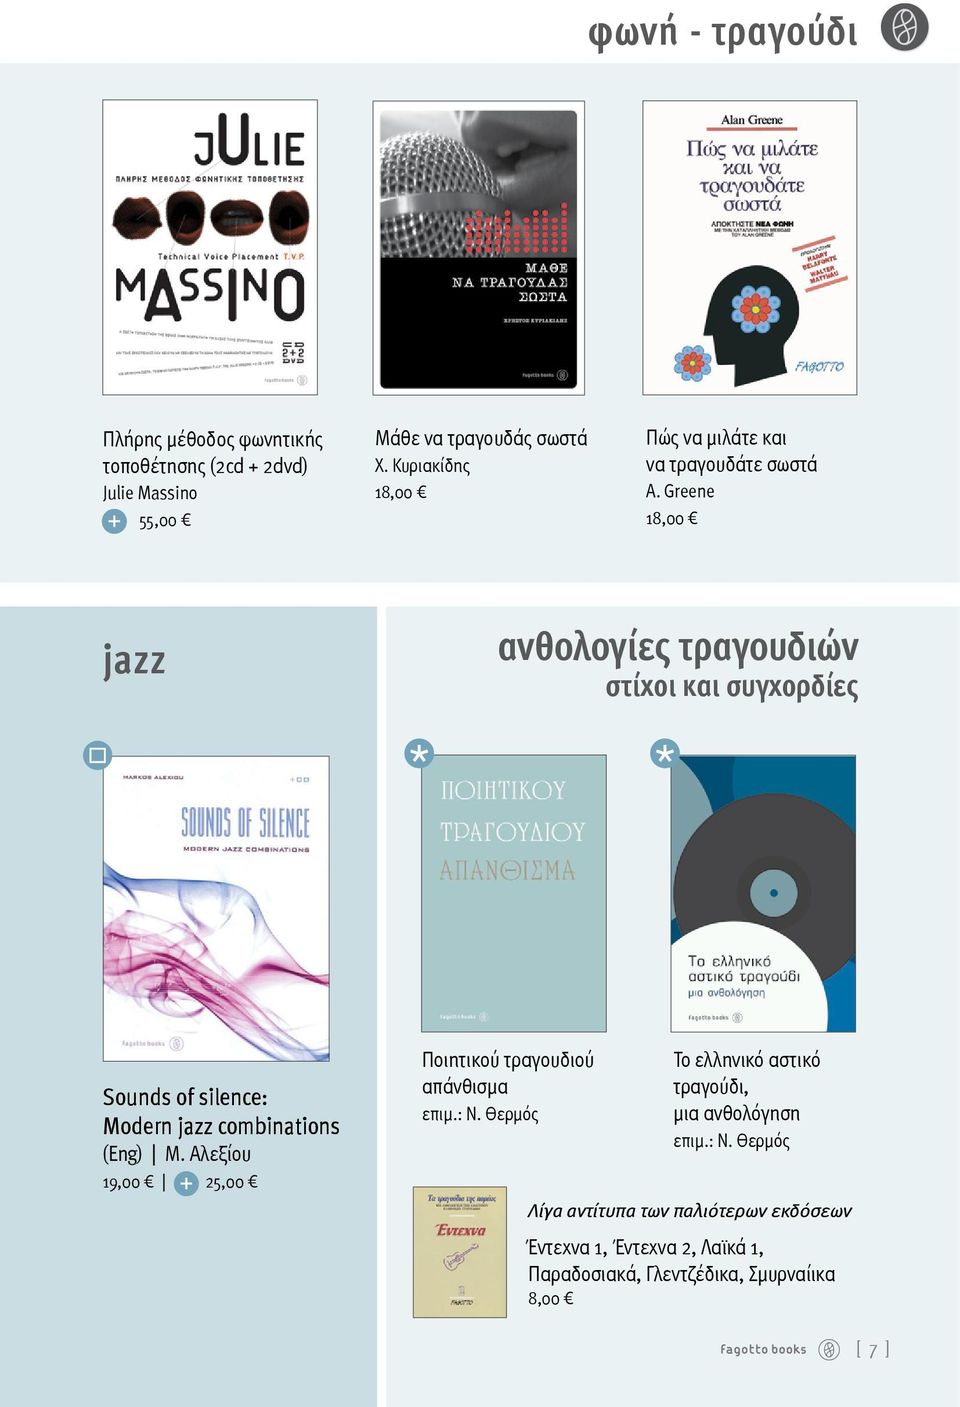 Greene 18,00 jazz ανθολογίες τραγουδιών στίχοι και συγχορδίες Sounds of silence: Μodern jazz combinations (Eng) M.